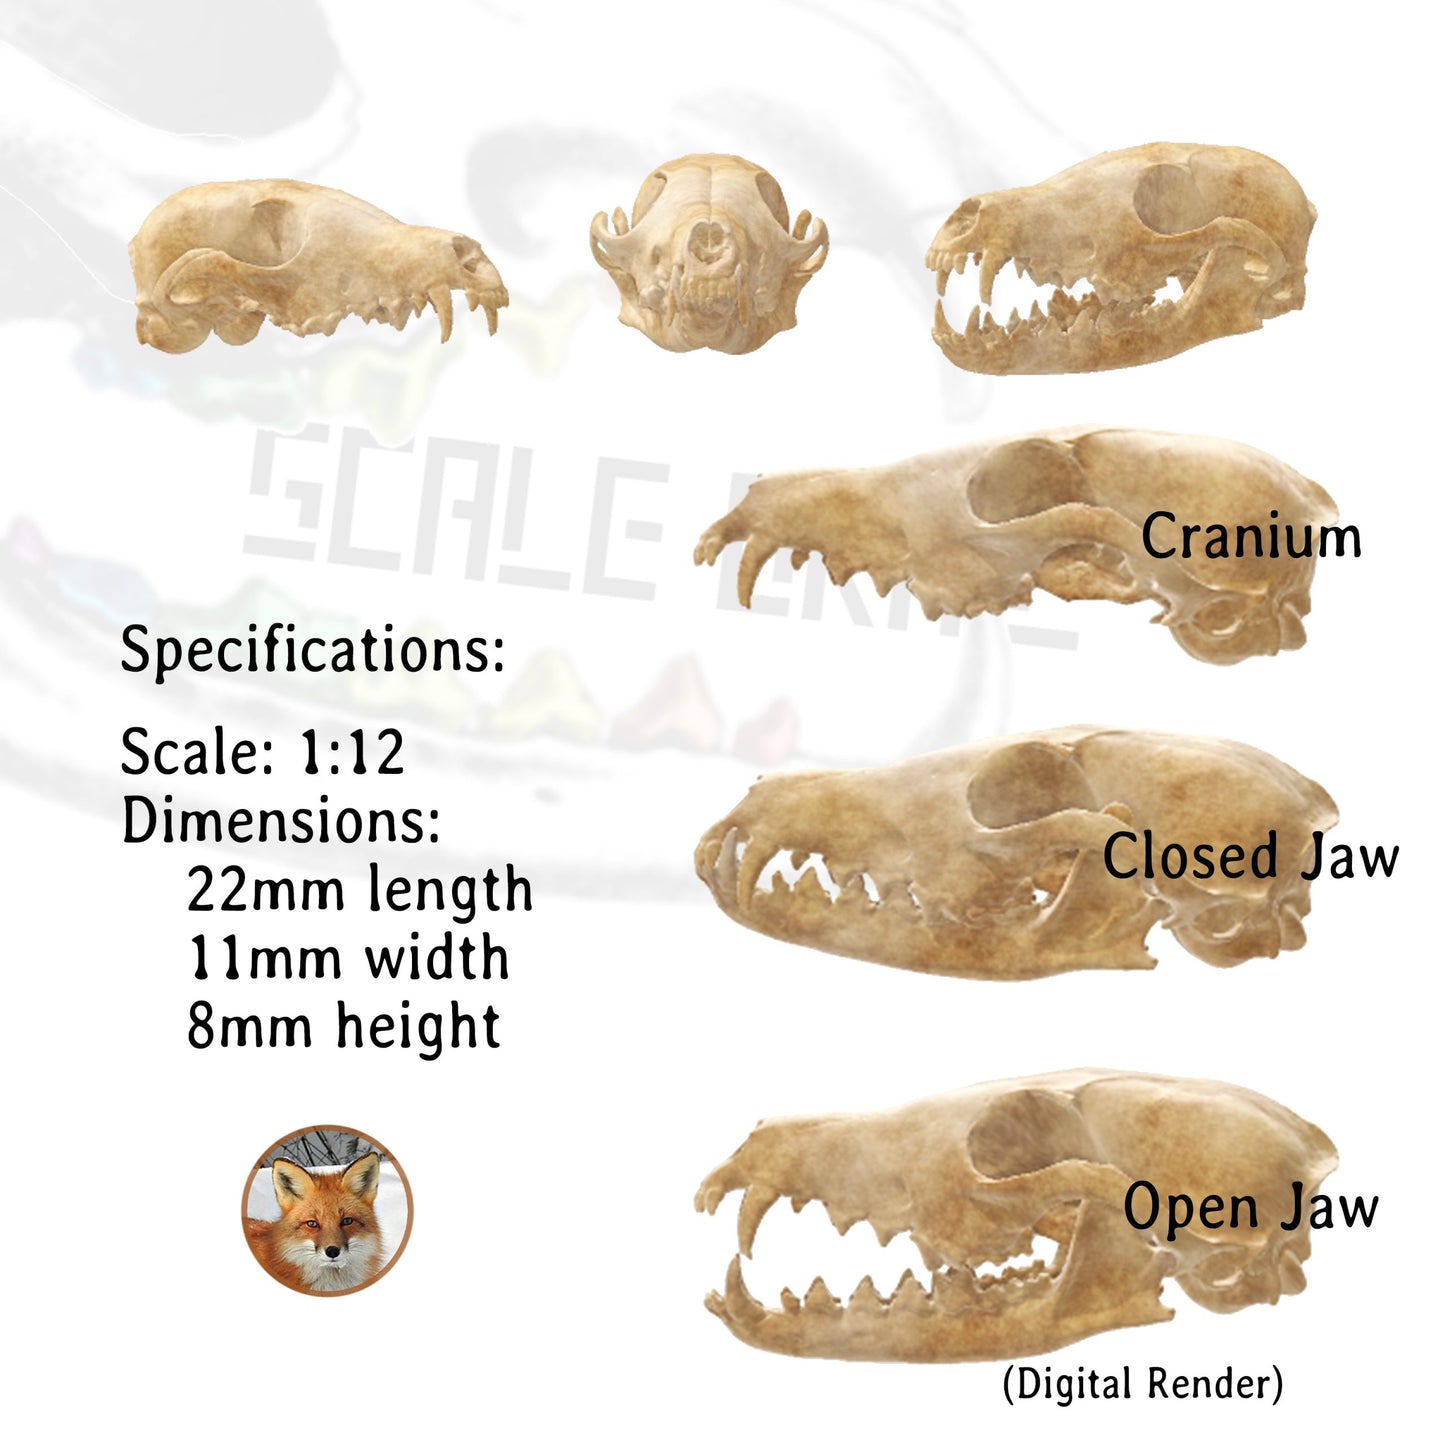 Red Fox Skull - 1:12 Scale Miniature